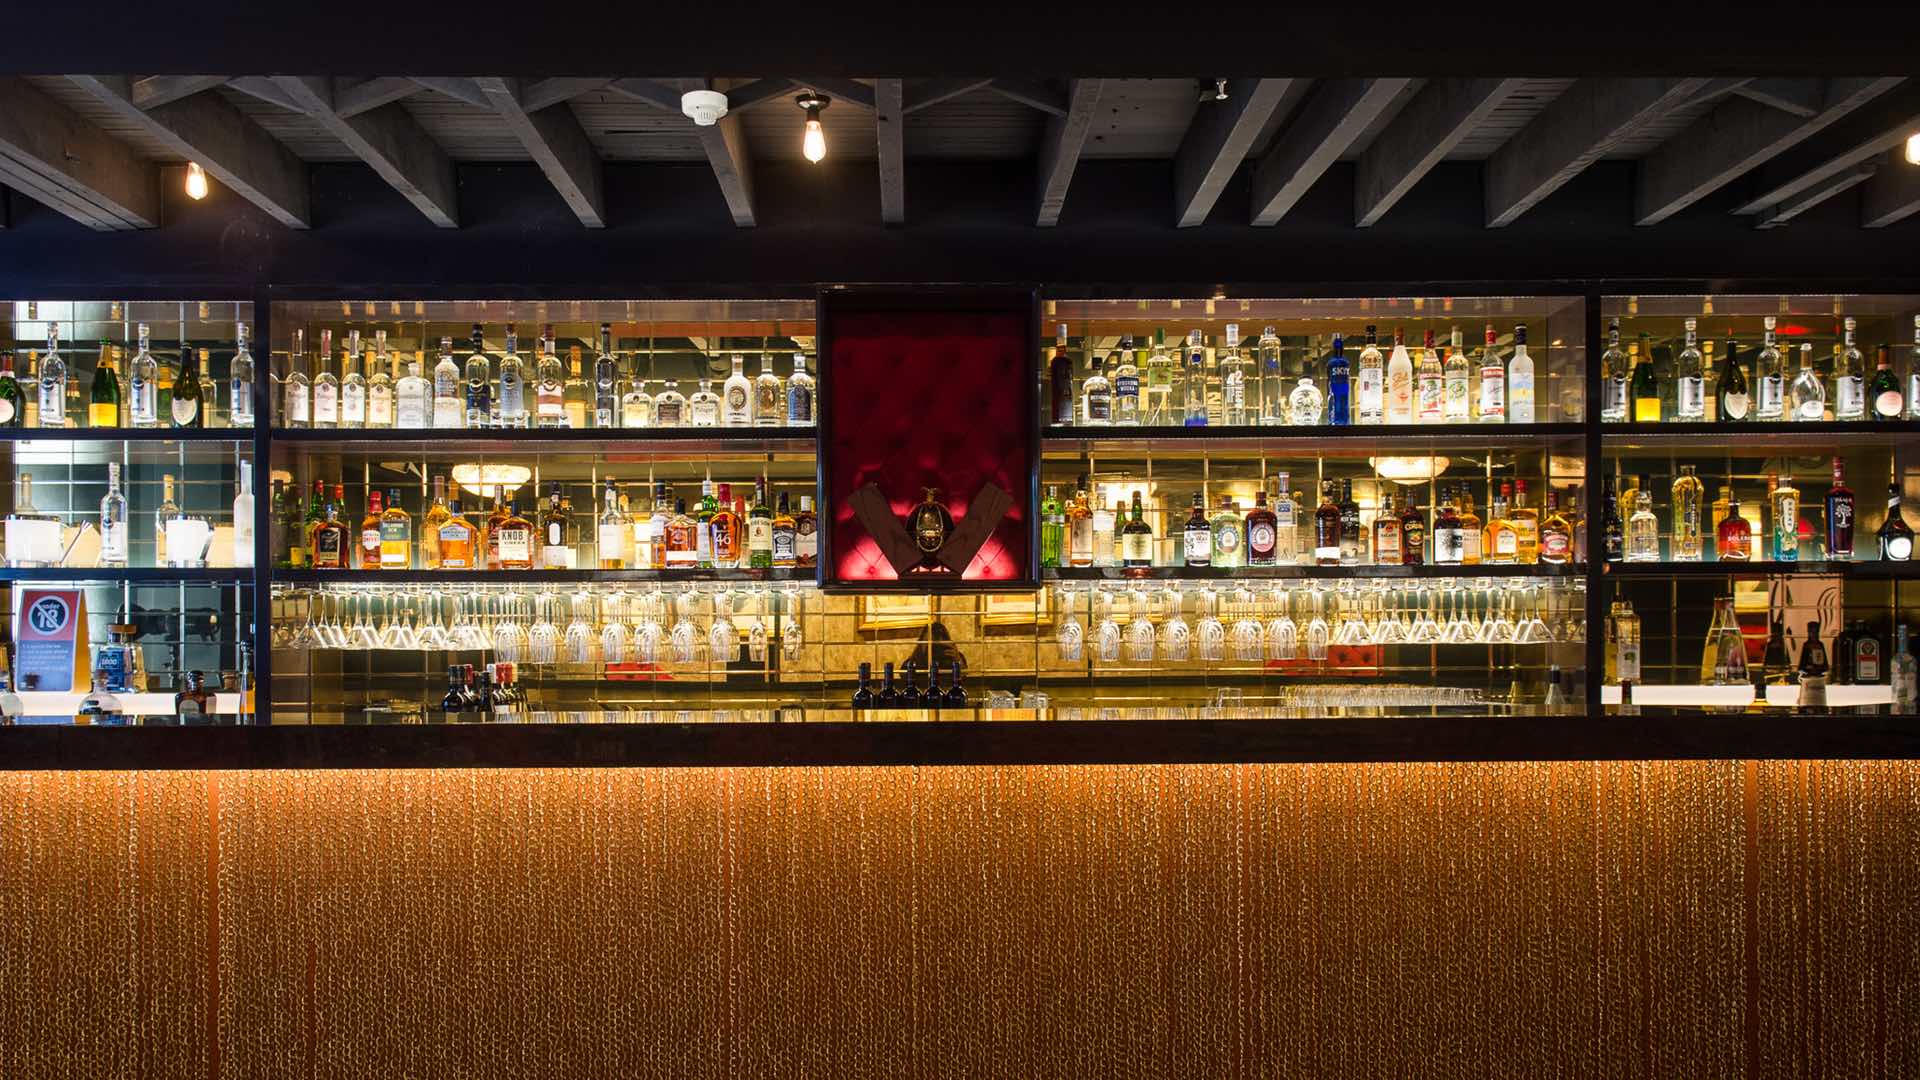 Greek Restaurant 1821 to Open Tremendously Decadent Basement Cocktail Bar